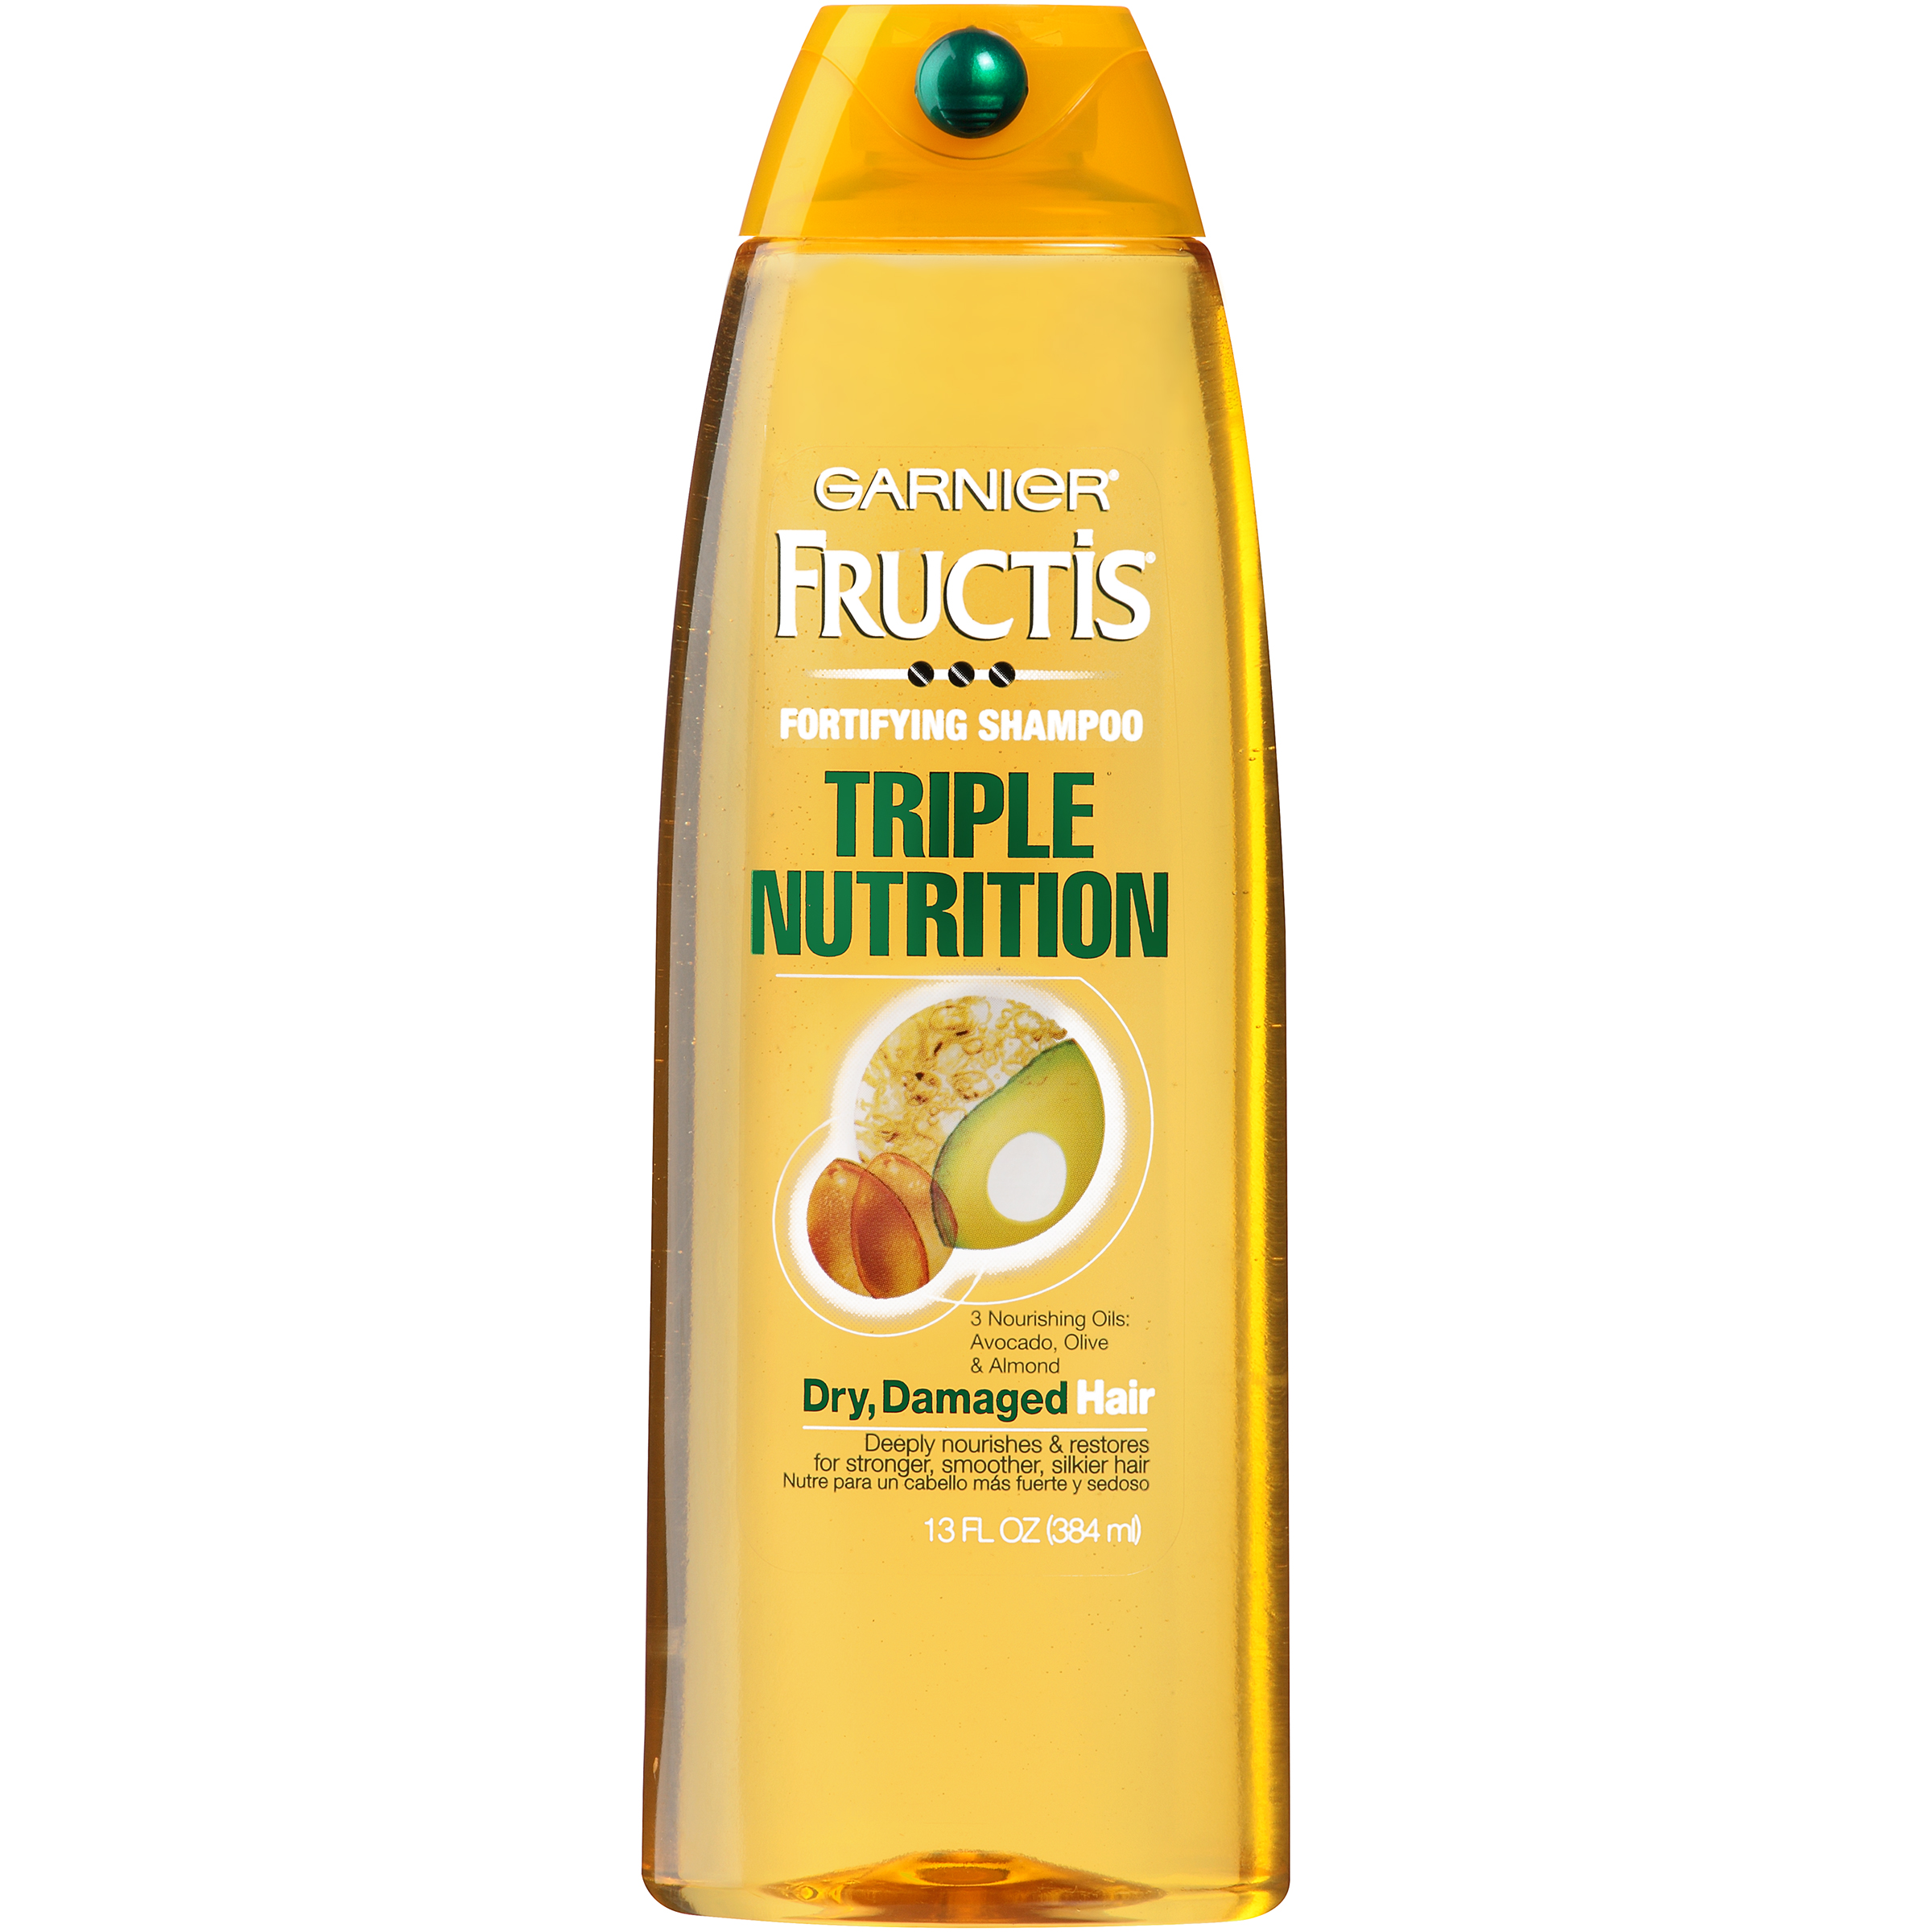 Garnier Fructis® Triple Nutrition Shampoo 13 fl. oz. Bottle